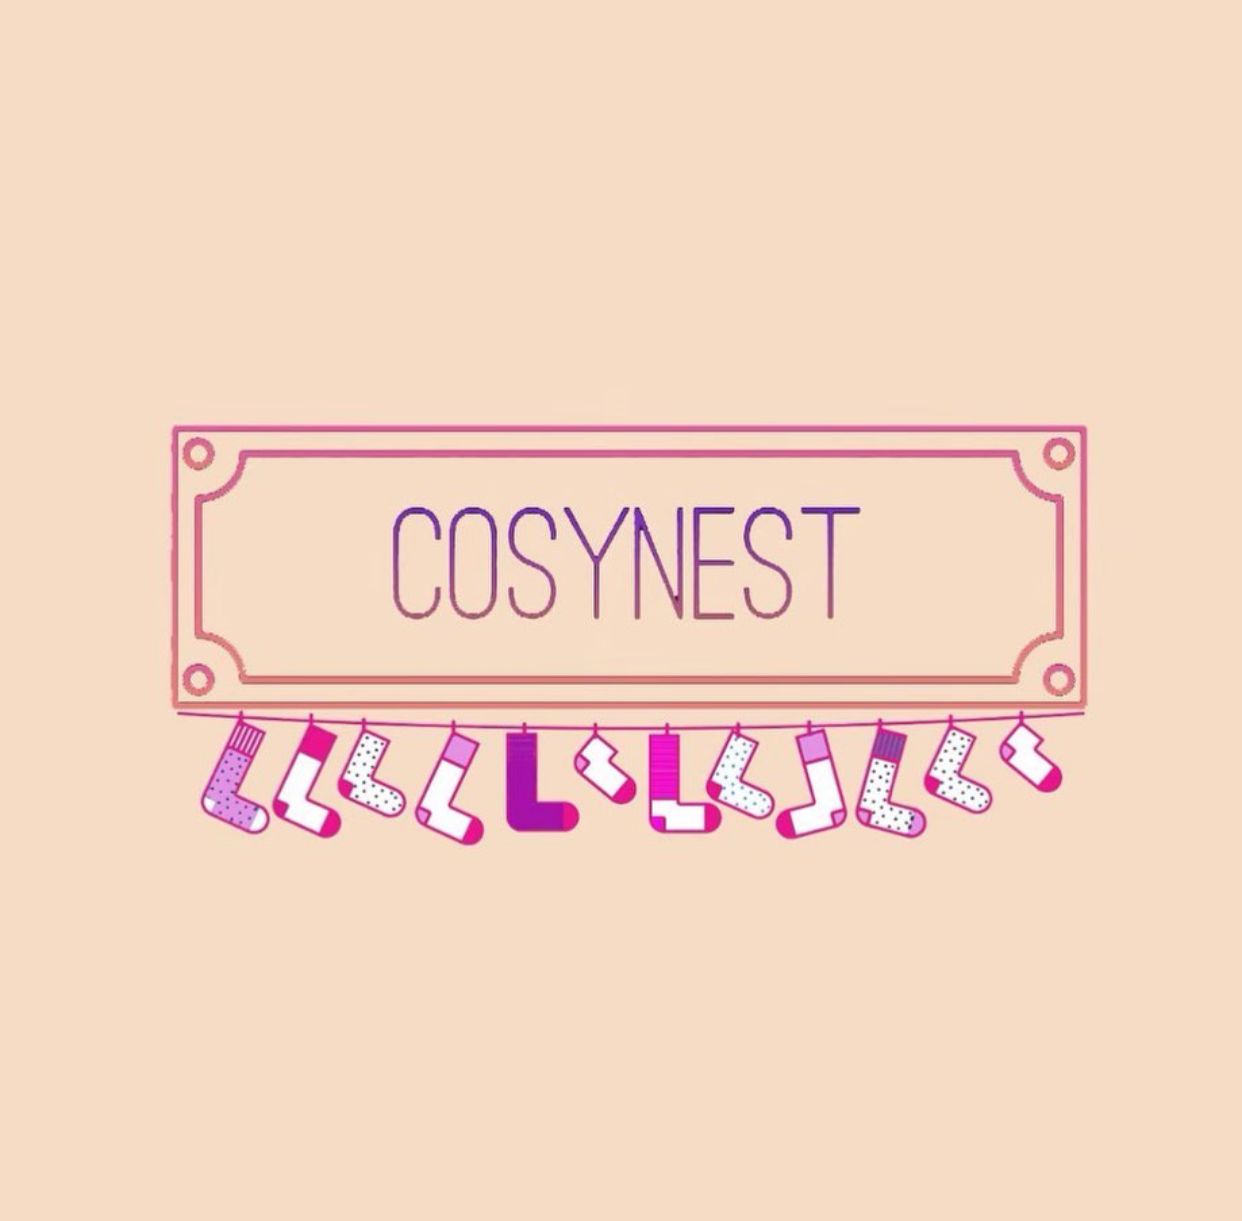 Cosynest.lb